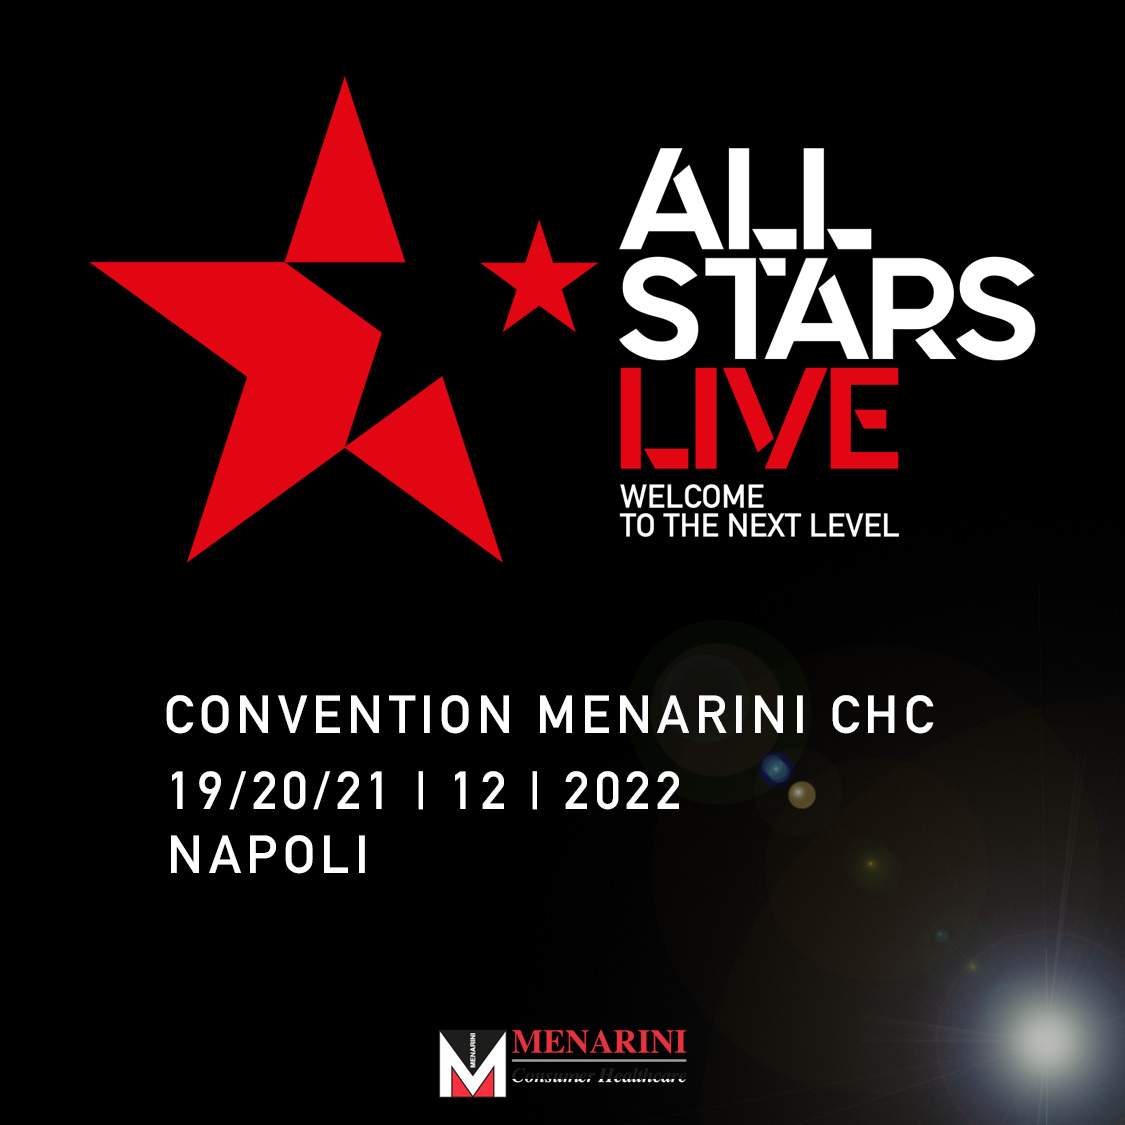 All Stars Live Menarini